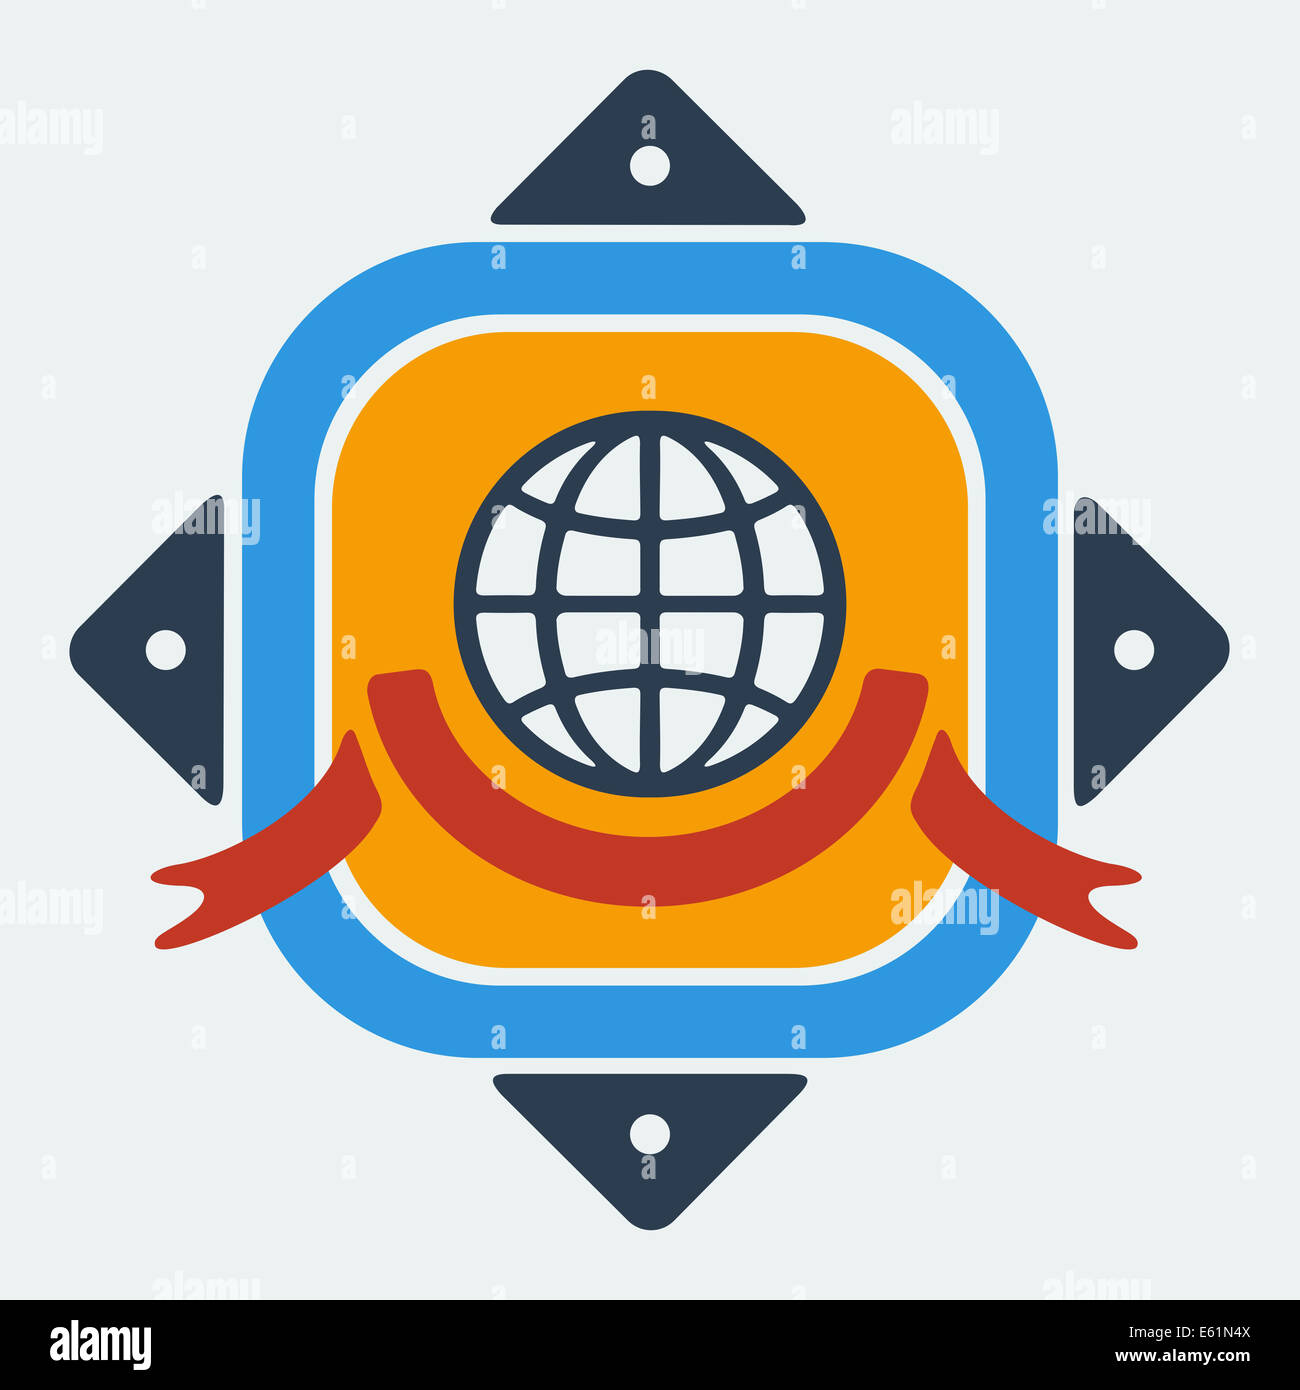 Emblem of International Peace Stock Photo